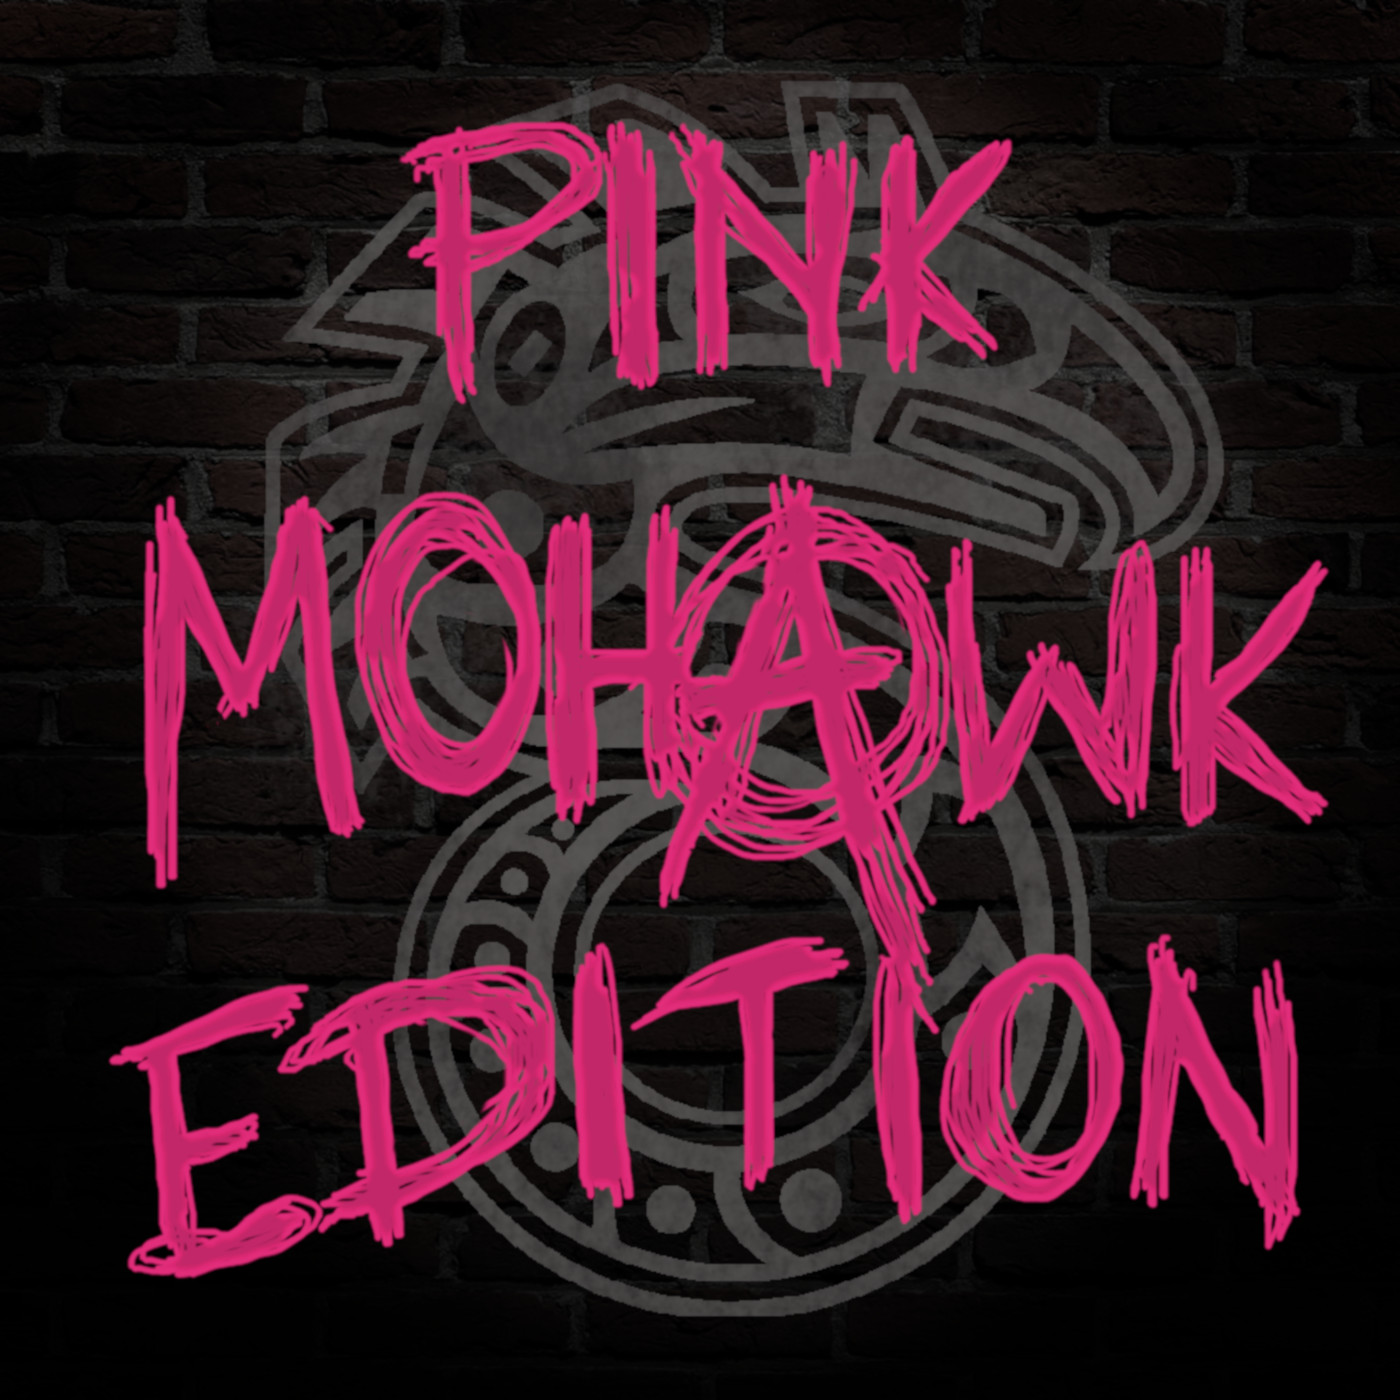 Pink Mohawk Edition